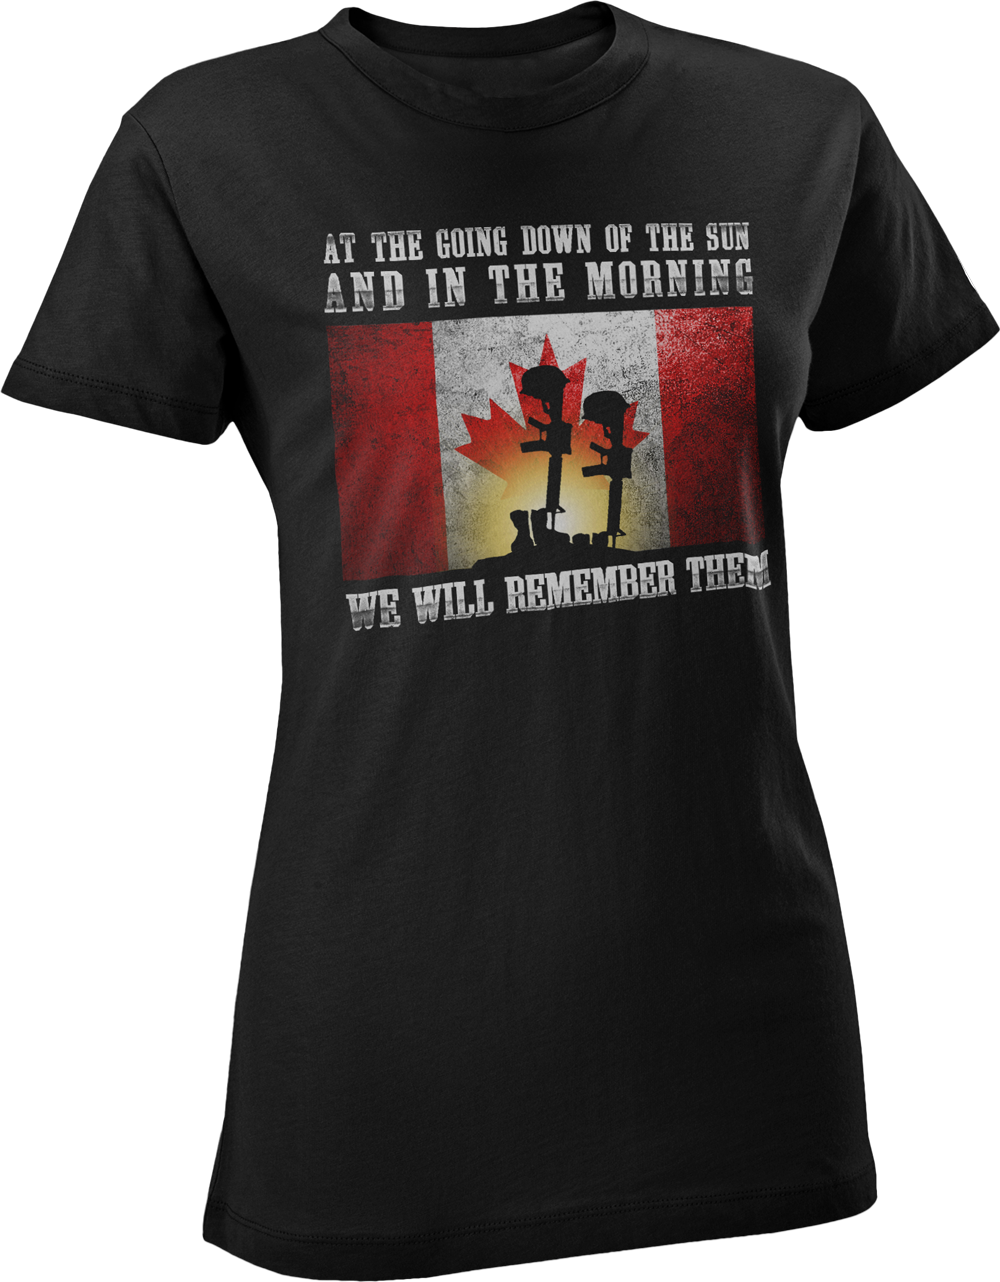 We Will Remember Them Memorial Women's T-Shirt